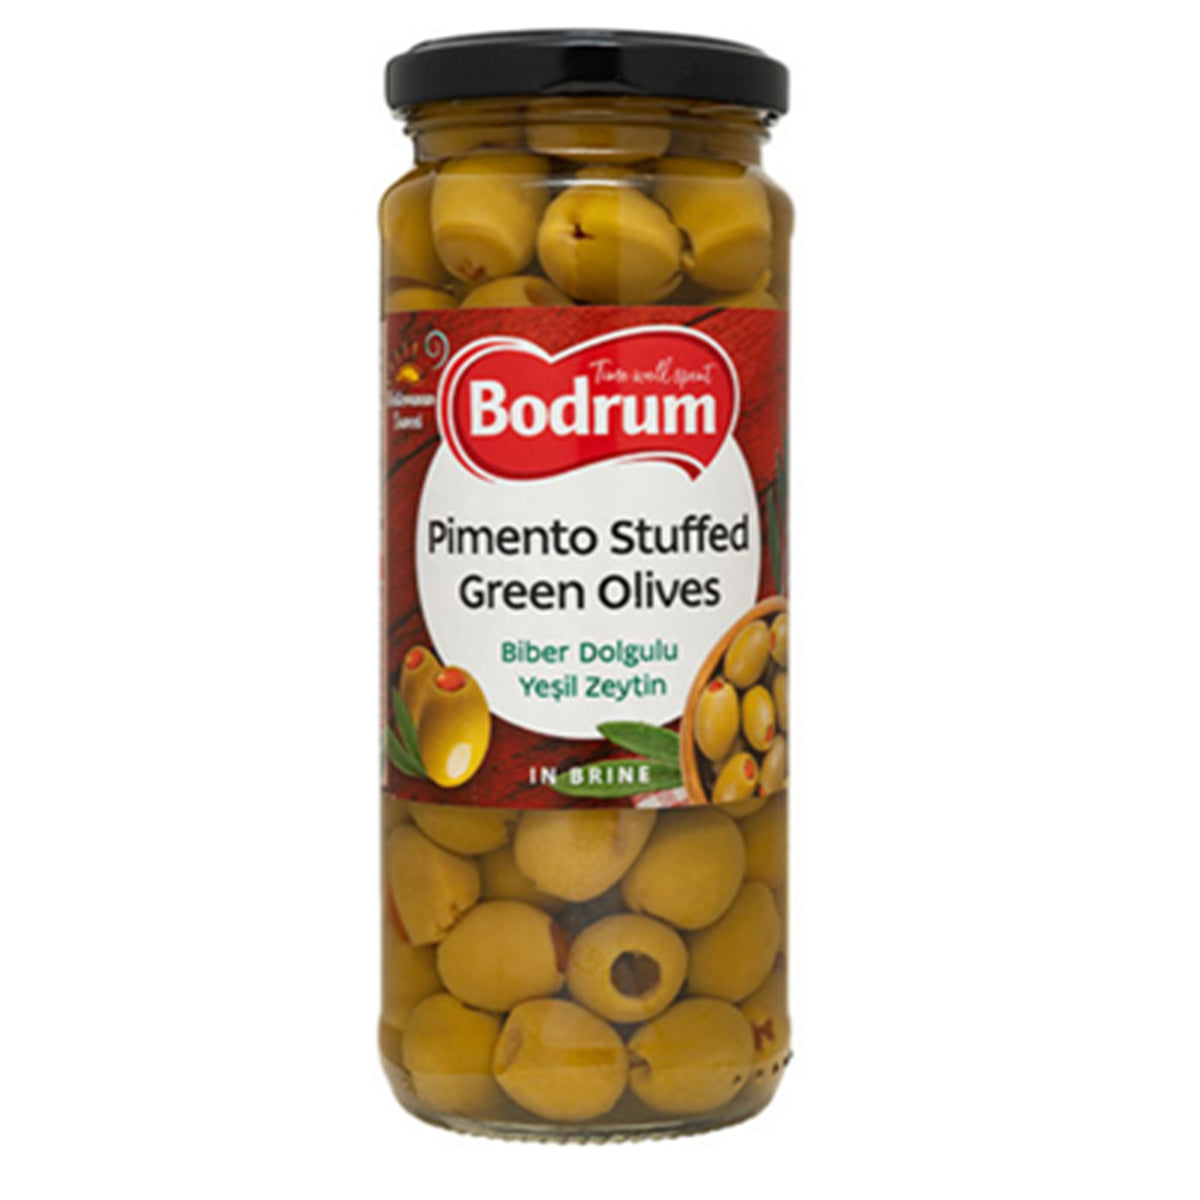 Bodrum Pimento Stuffed Green Olives - 320g.